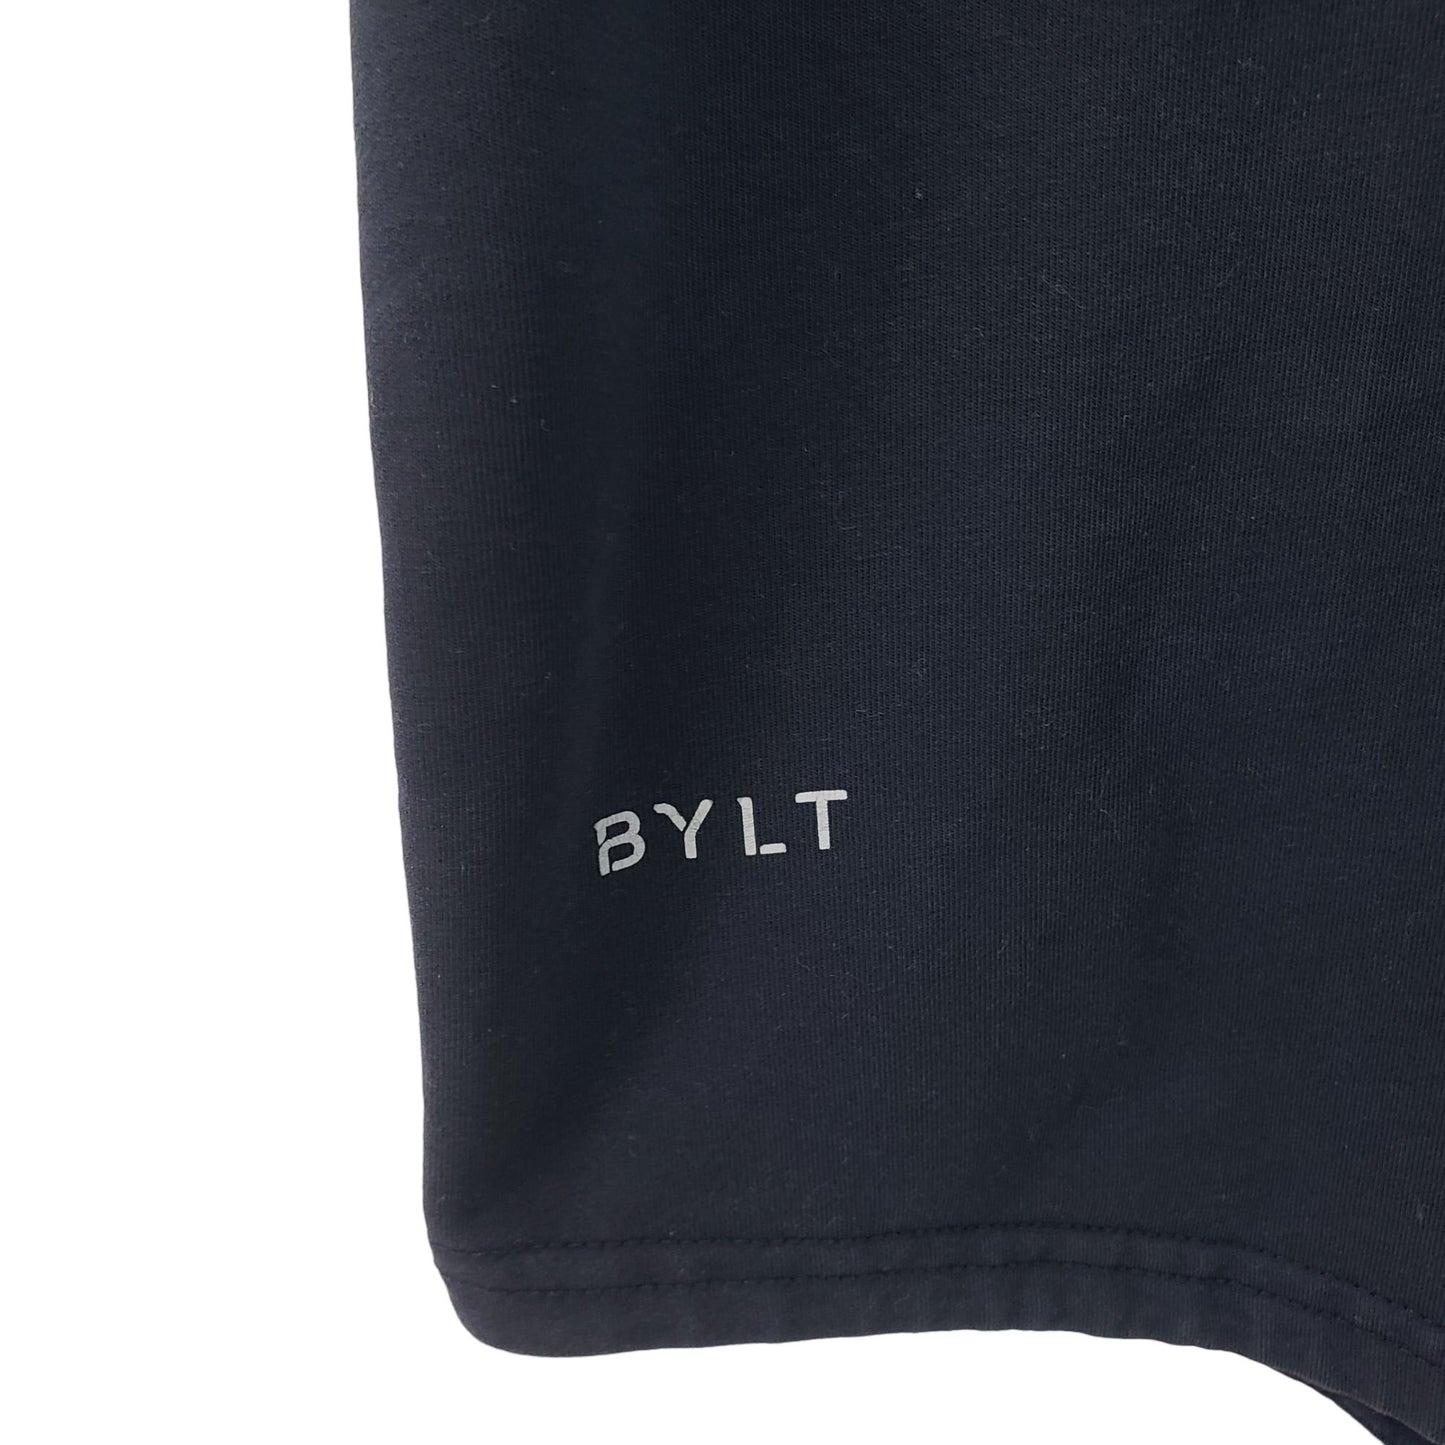 BYLT Drop Cut Lux Short Sleeve Activewear T-Shirt Size Medium